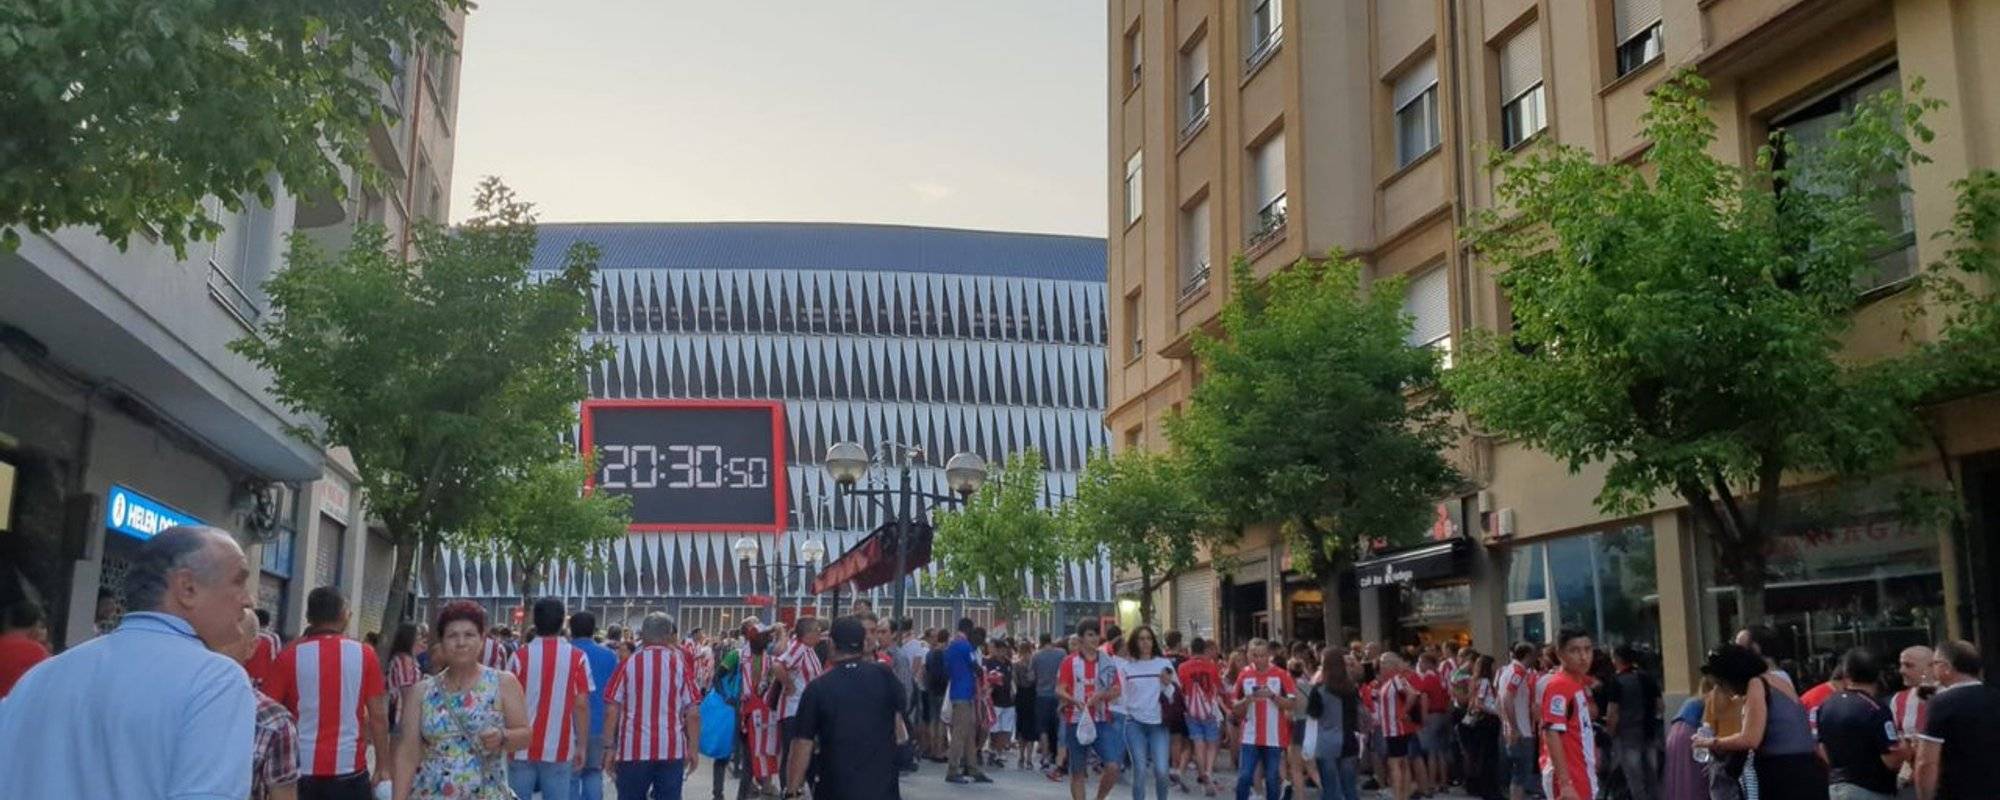 The San Mamés Stadium-Bilbao, Basque Country, Spain